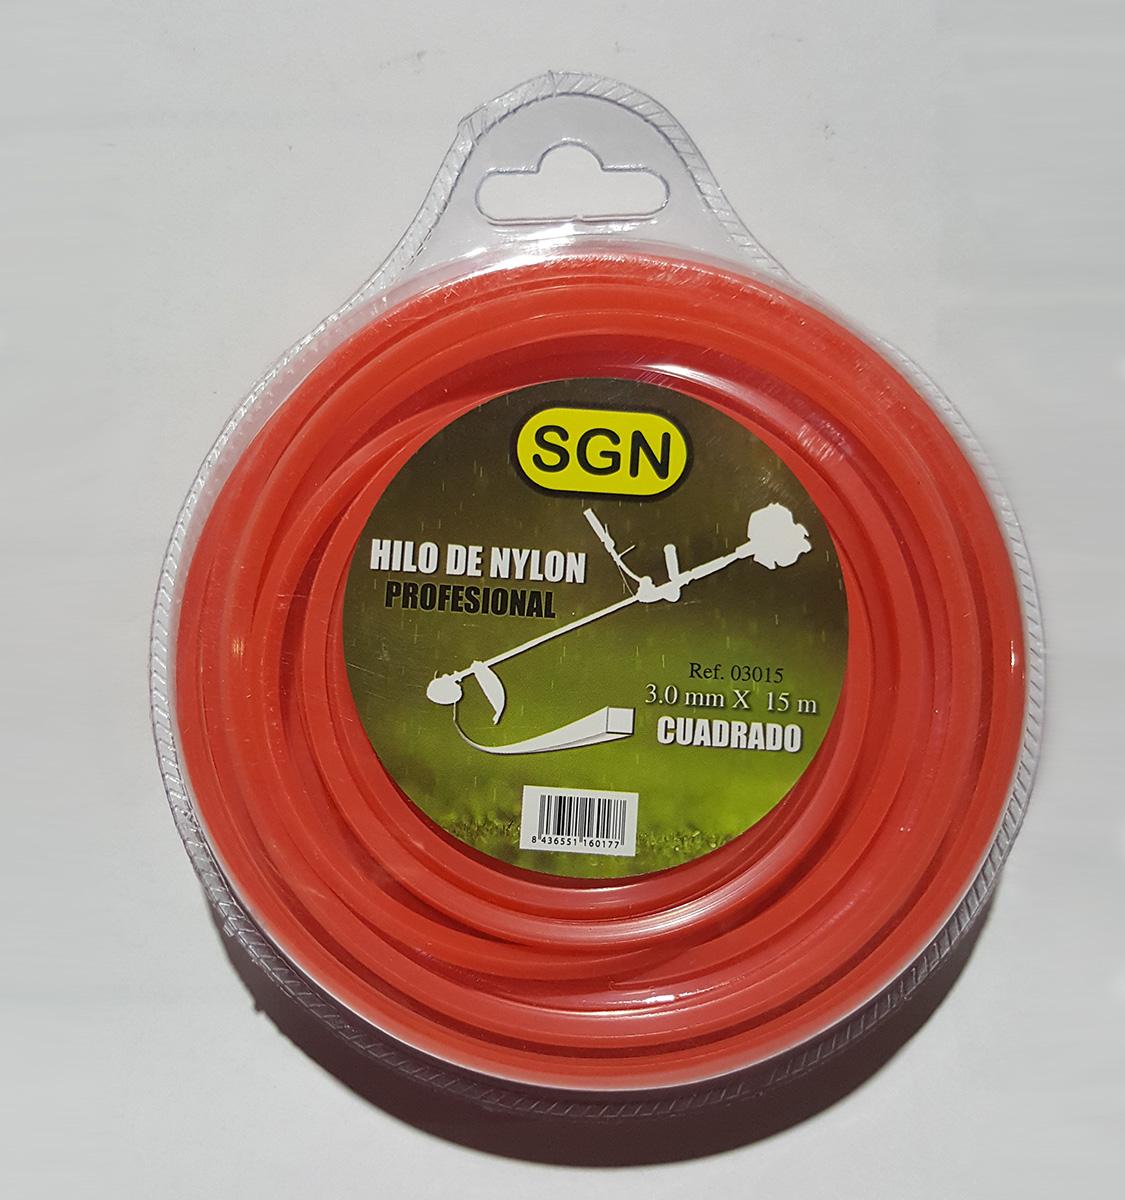 Hilo Nylon Desbroce 3,0MM x 15M, Cuadrado, Blister, Color naranja